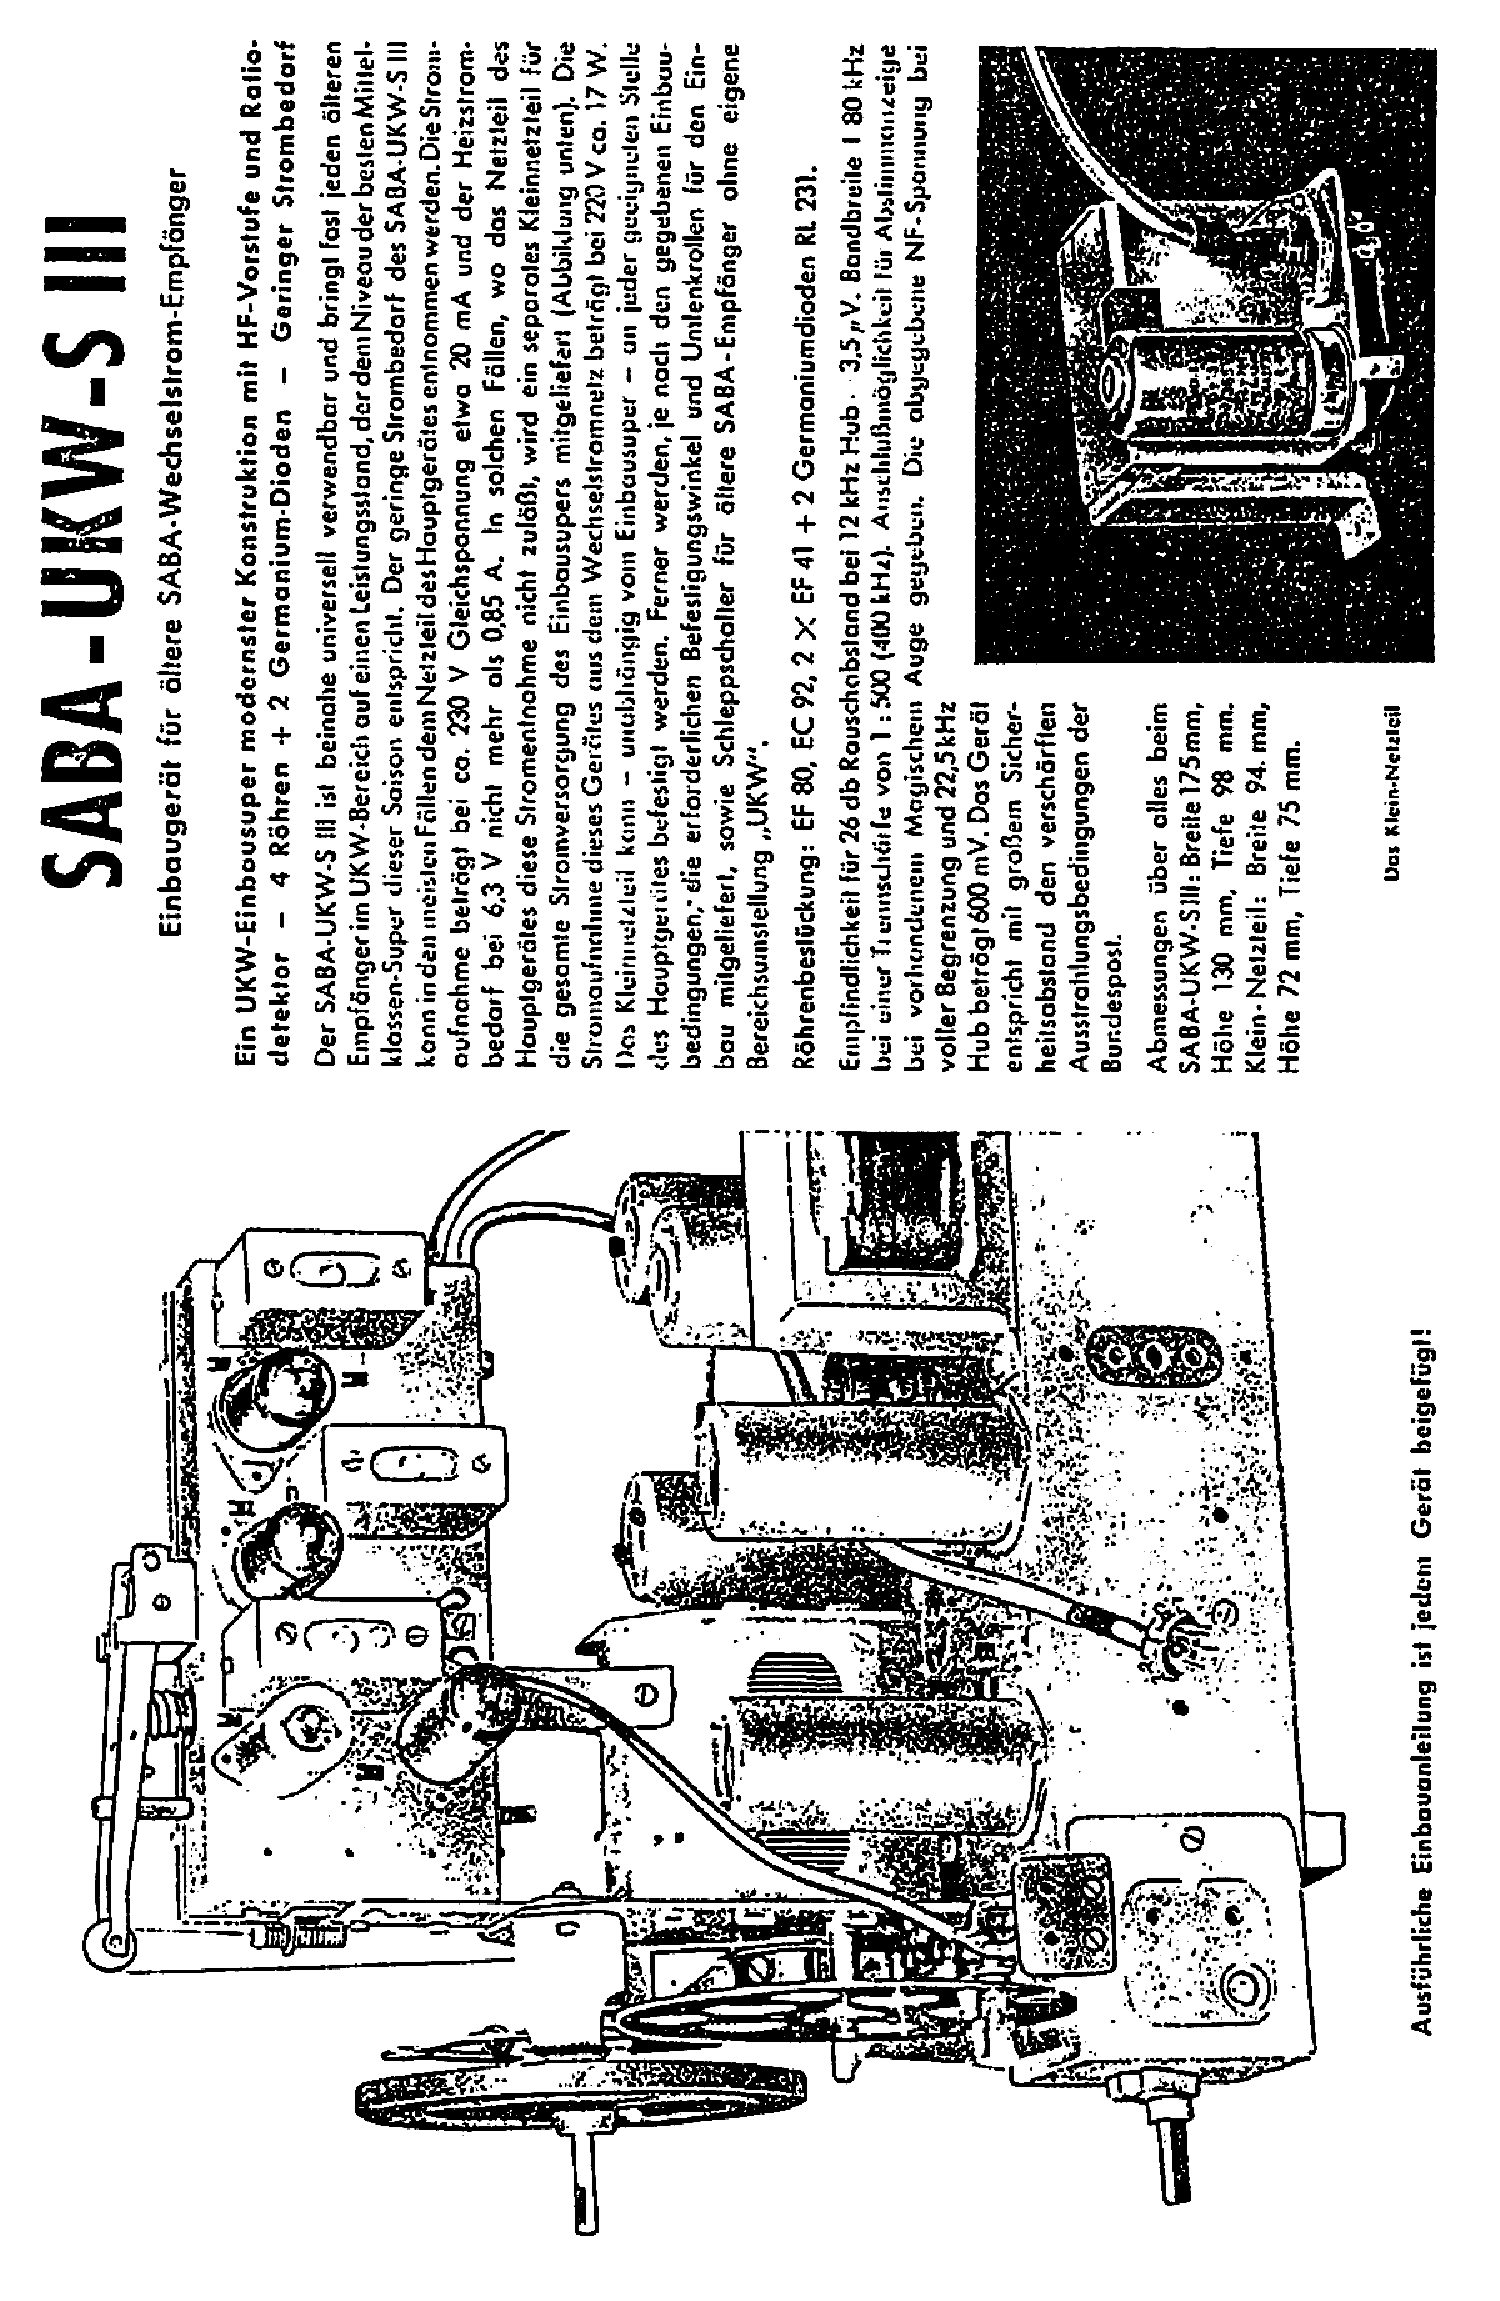 SABA UKW-S-III FM-CONVERTER RADIO 1953 SM service manual (1st page)